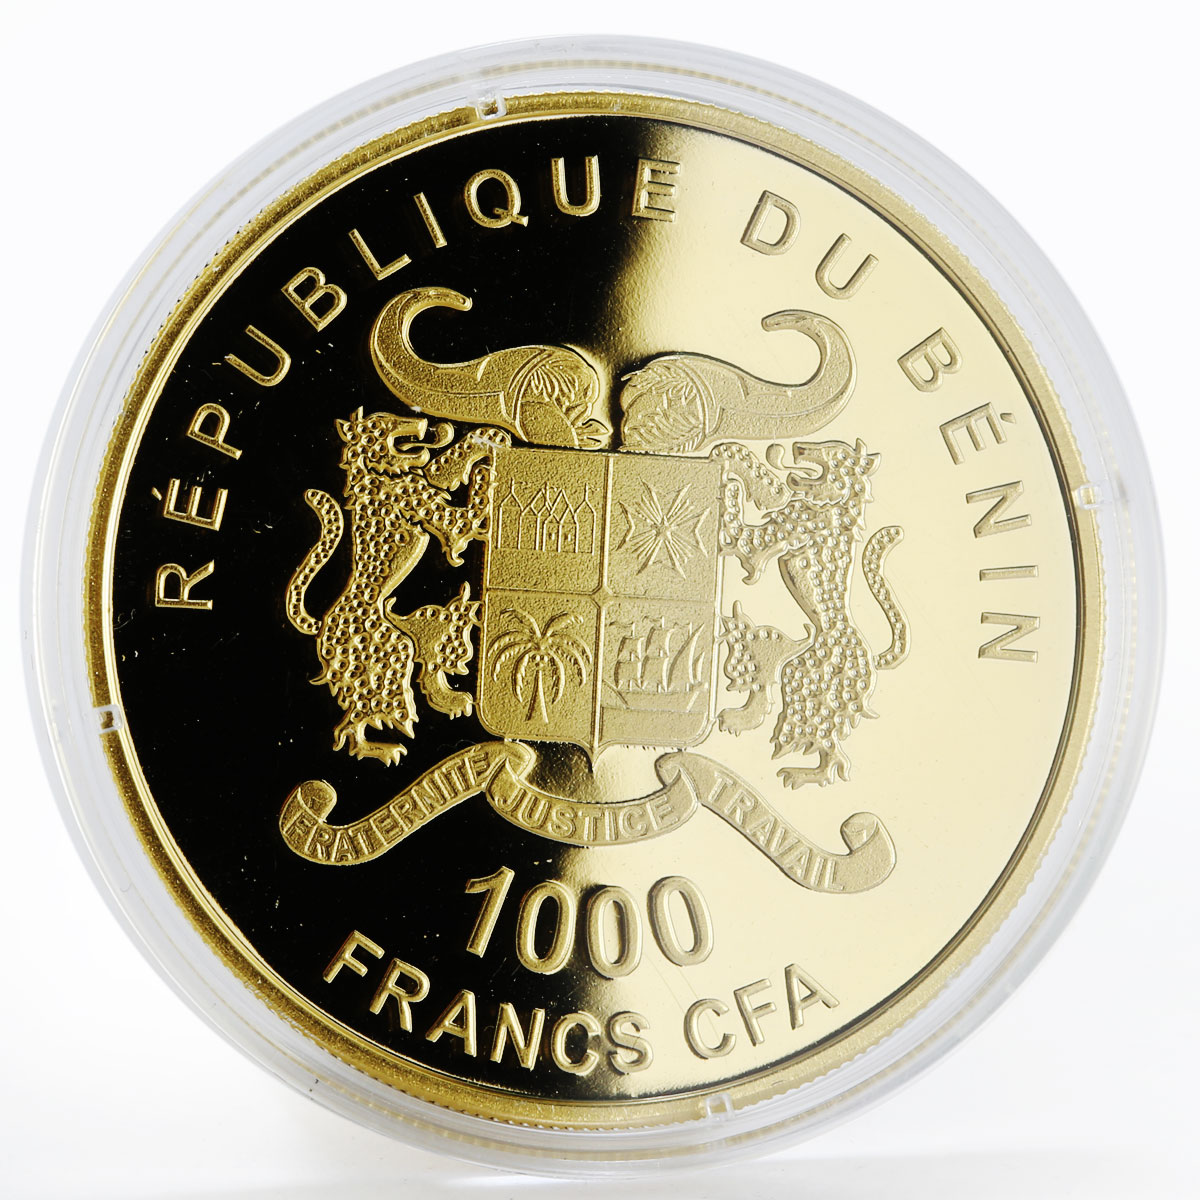 Benin 1000 francs Viktor Tsoy gilded proof silver coin 2020